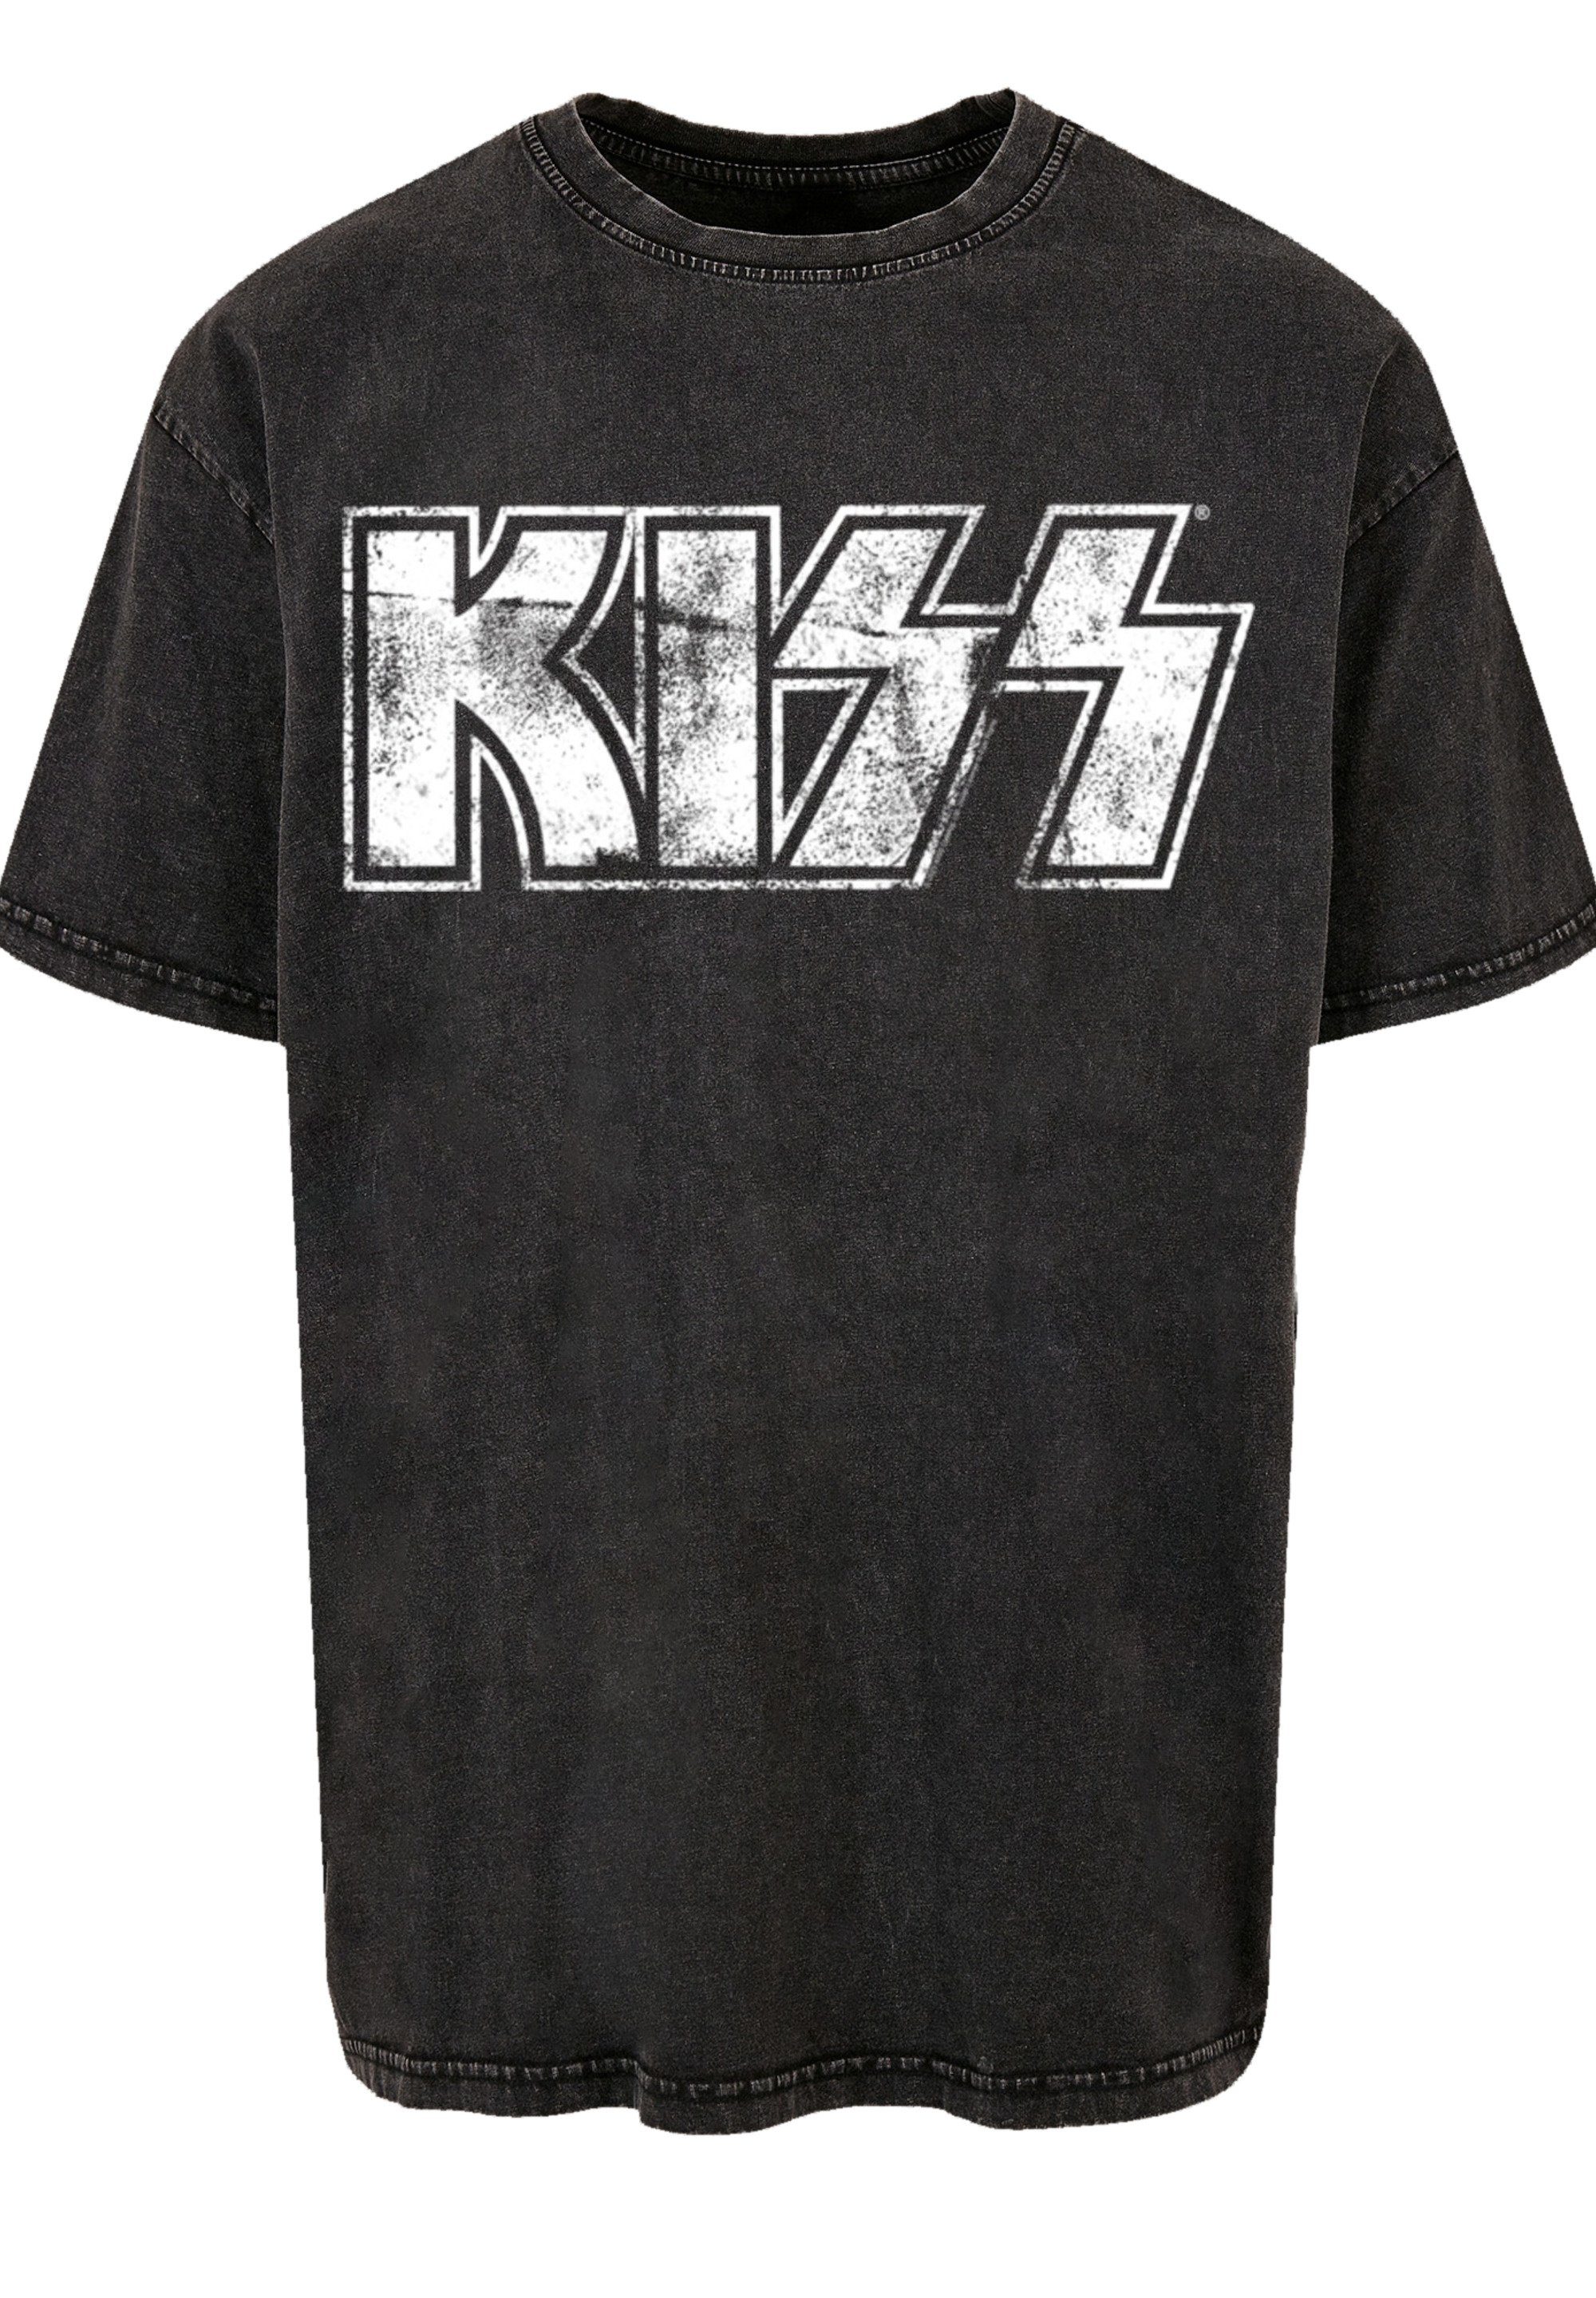 By Kiss Qualität, Off Band F4NT4STIC Musik, Logo Premium Vintage Rock T-Shirt Rock schwarz